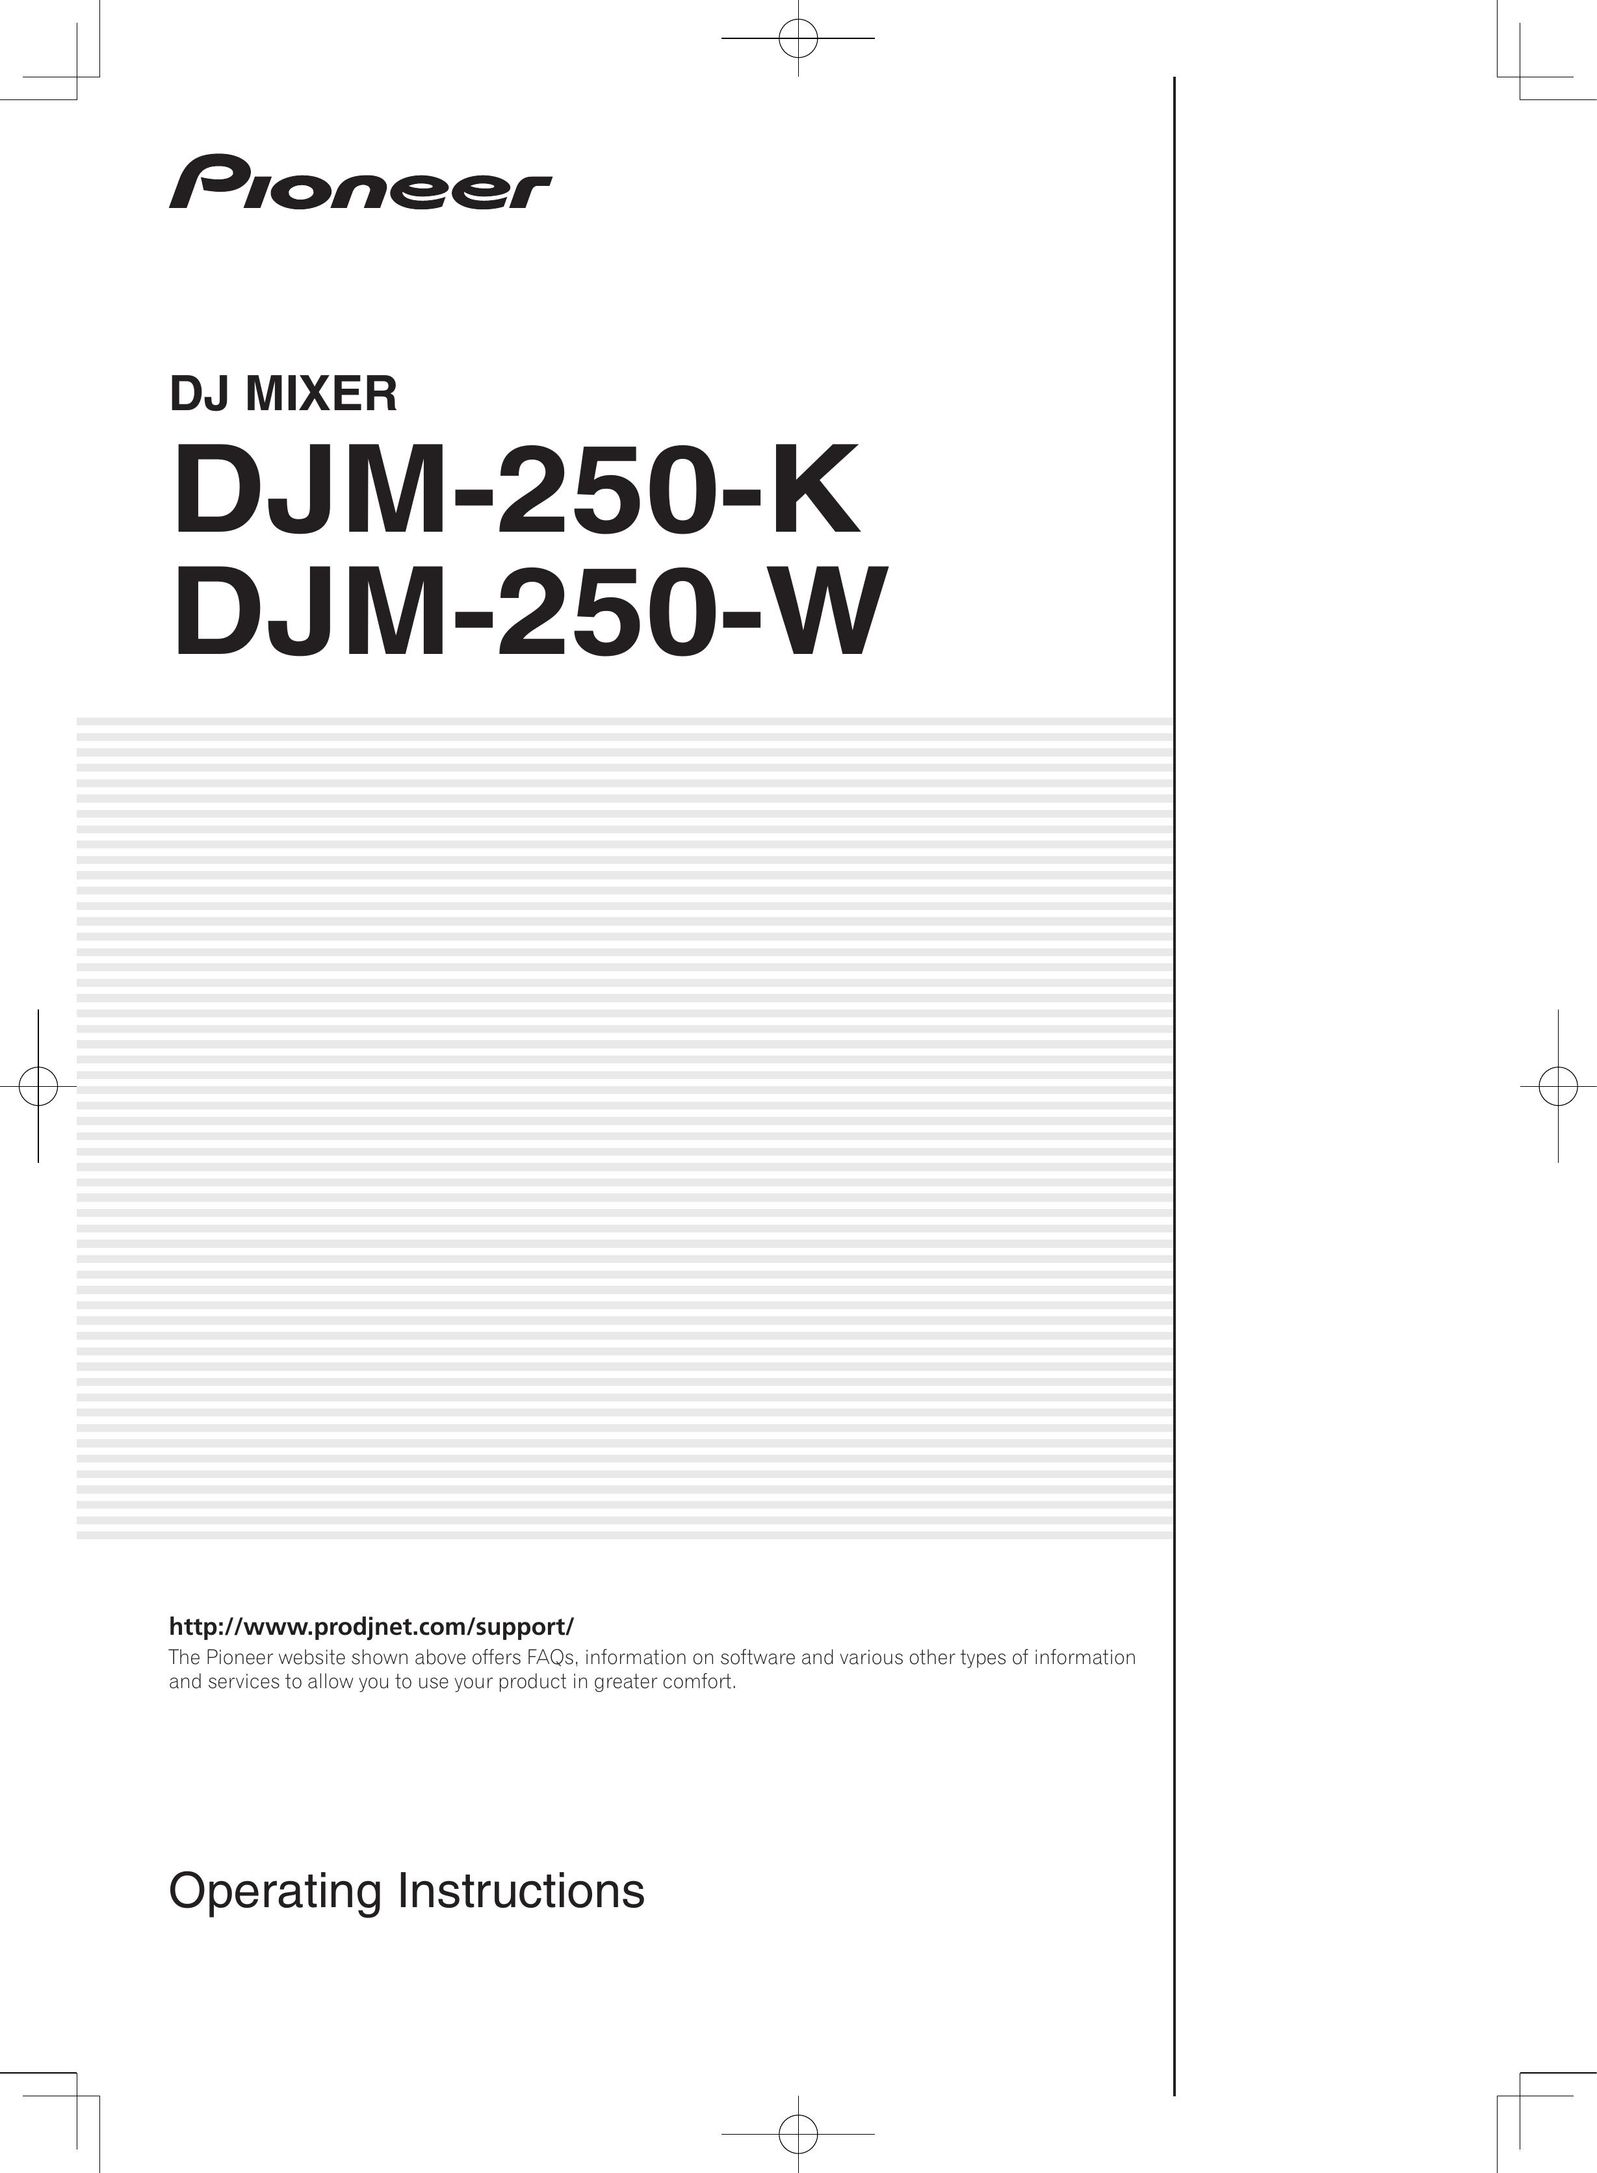 Pioneer DJM-250-K Musical Table User Manual